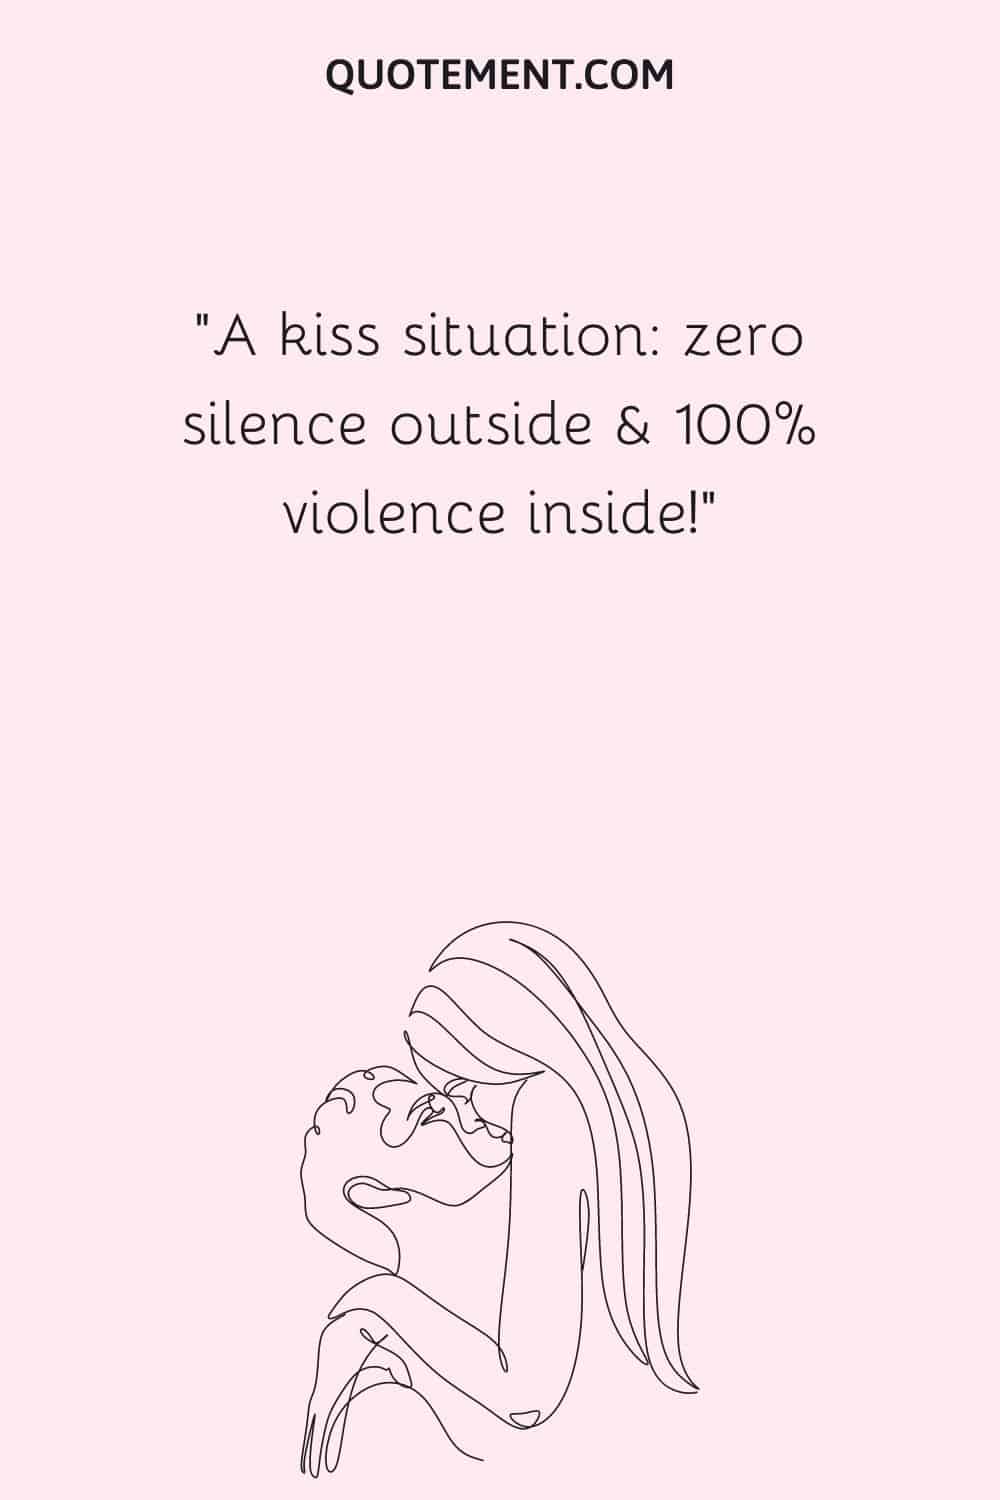 A kiss situation zero silence outside & 100% violence inside!